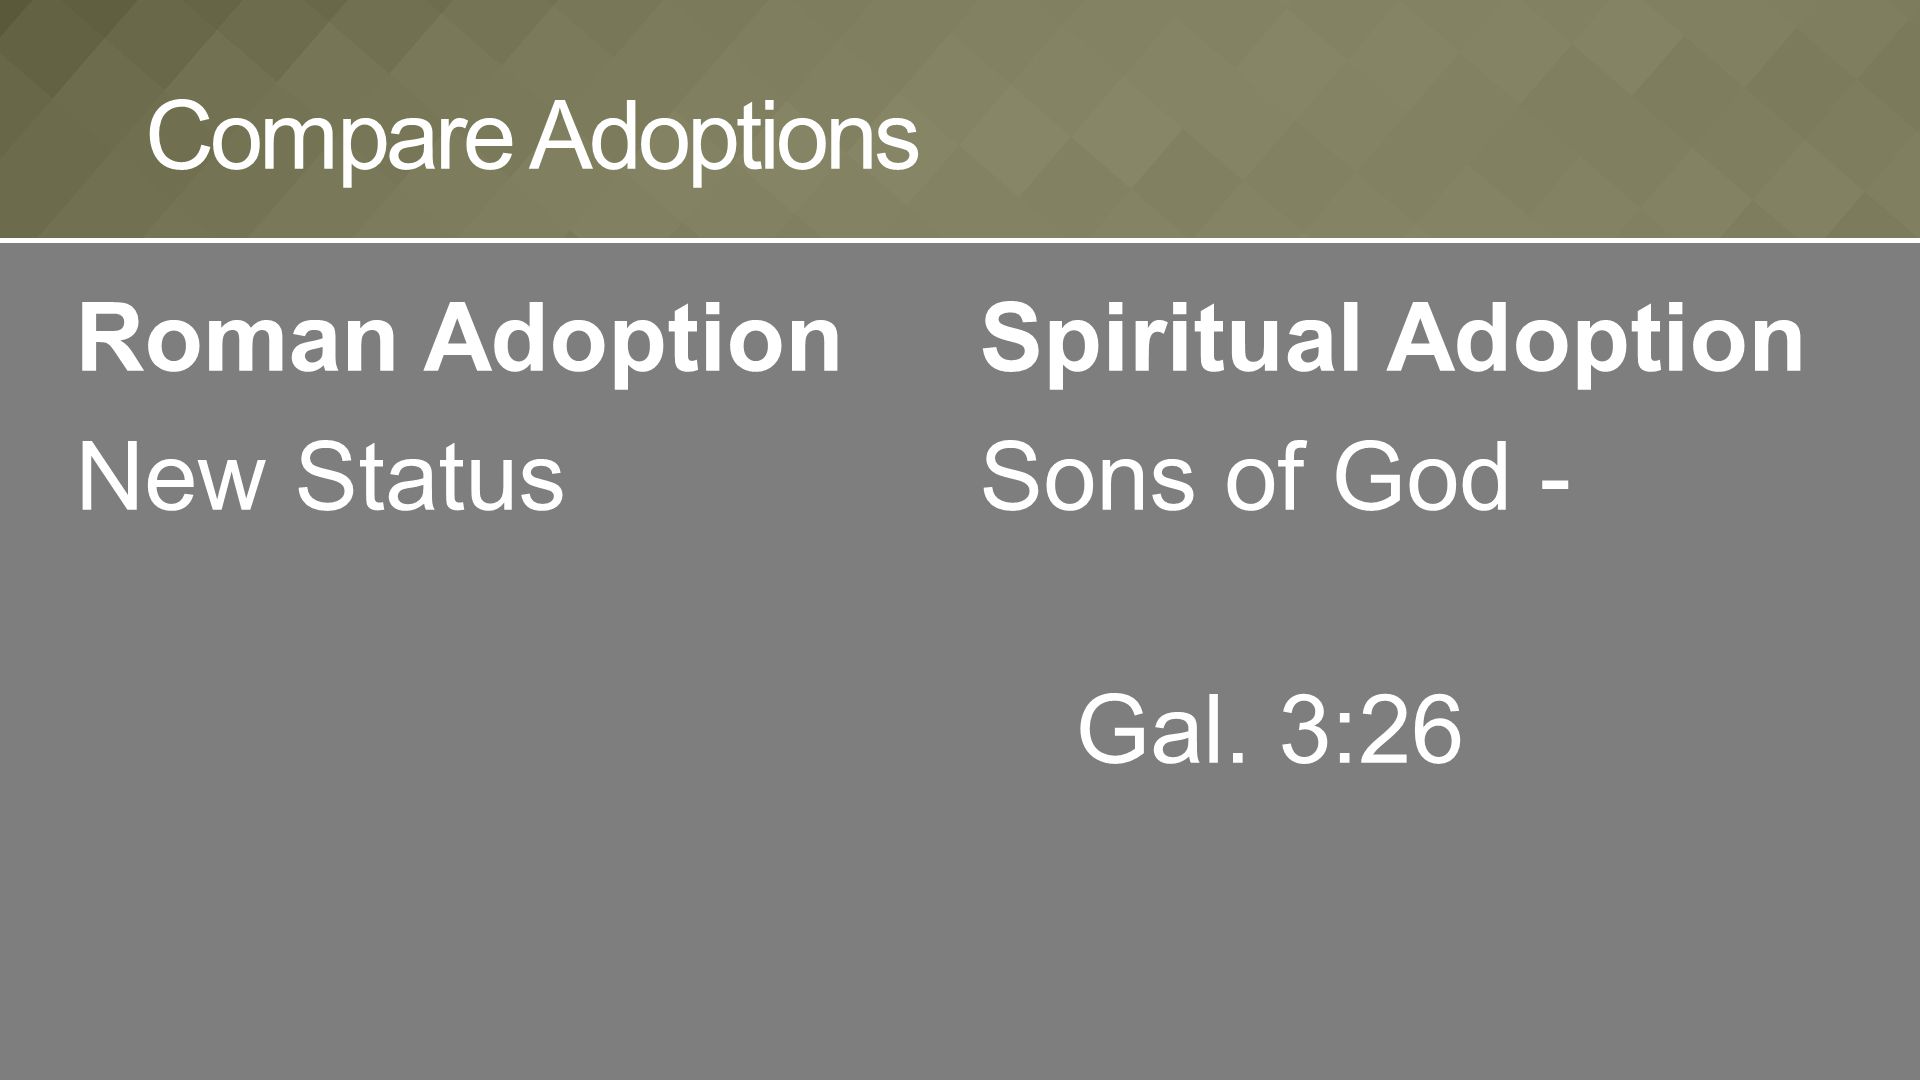 Roman Adoption New Status Compare Adoptions Spiritual Adoption Sons of God - Gal. 3:26